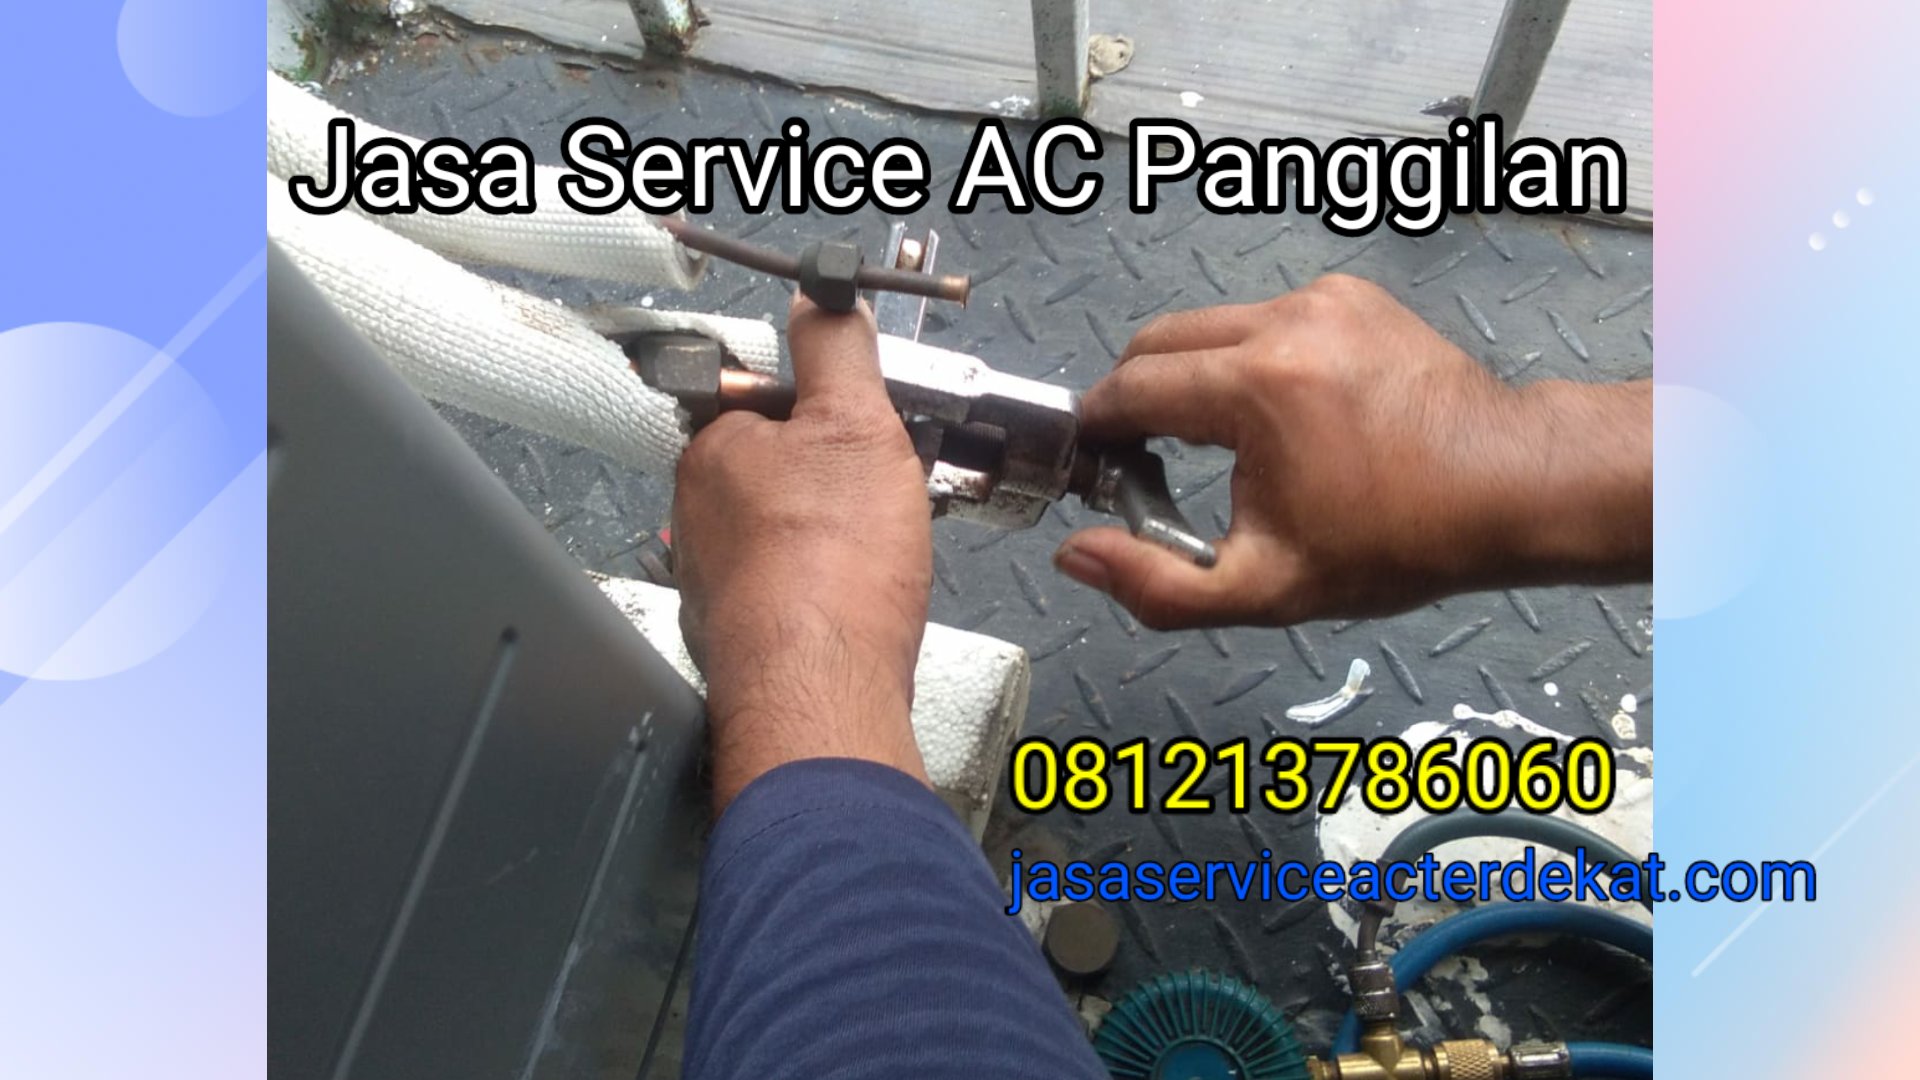 Jasa service ac